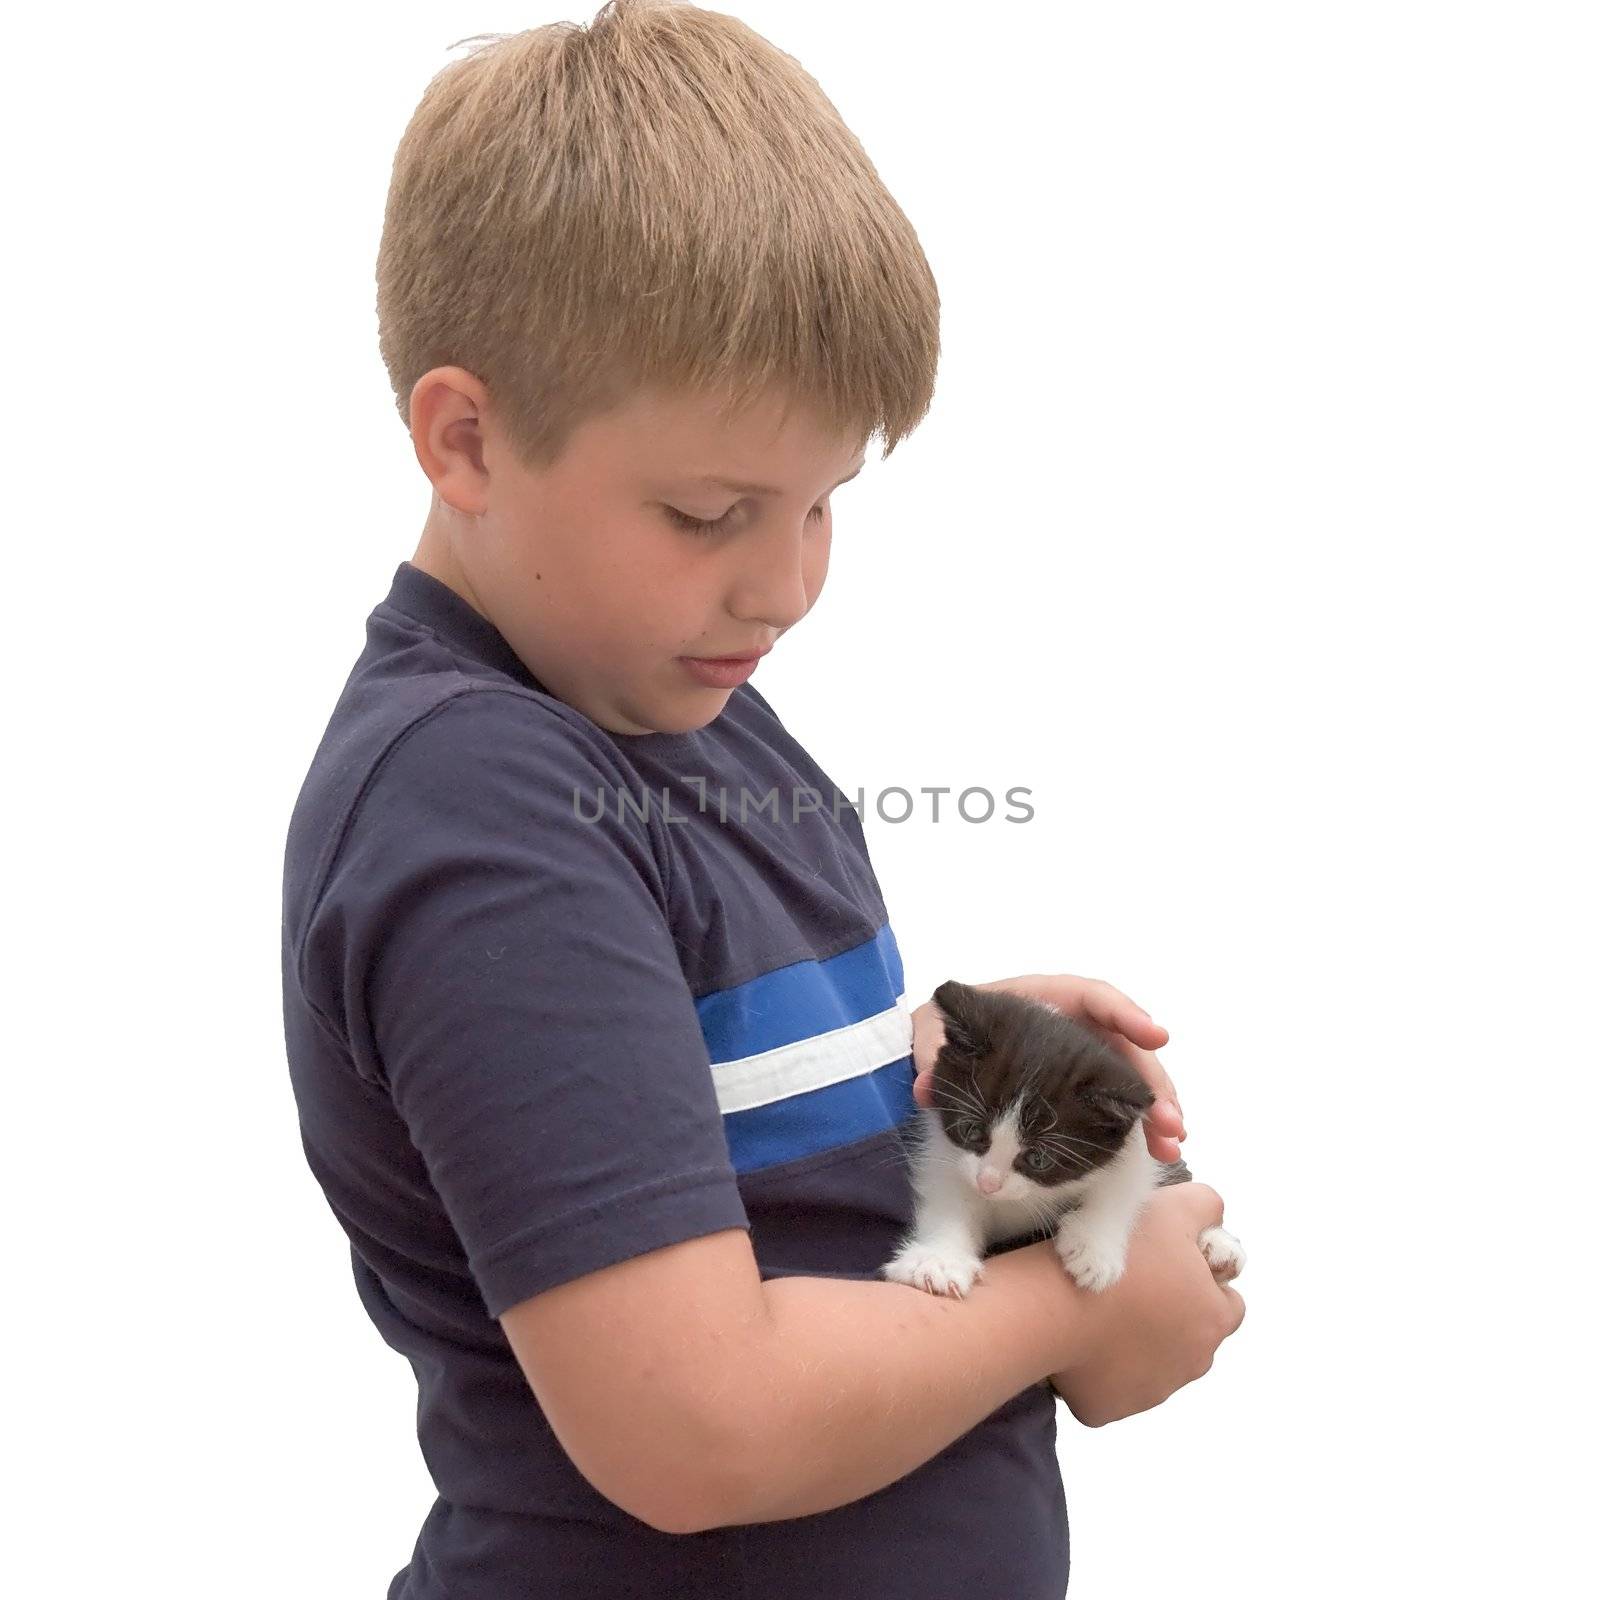 A young boy cuddling his pet kitten